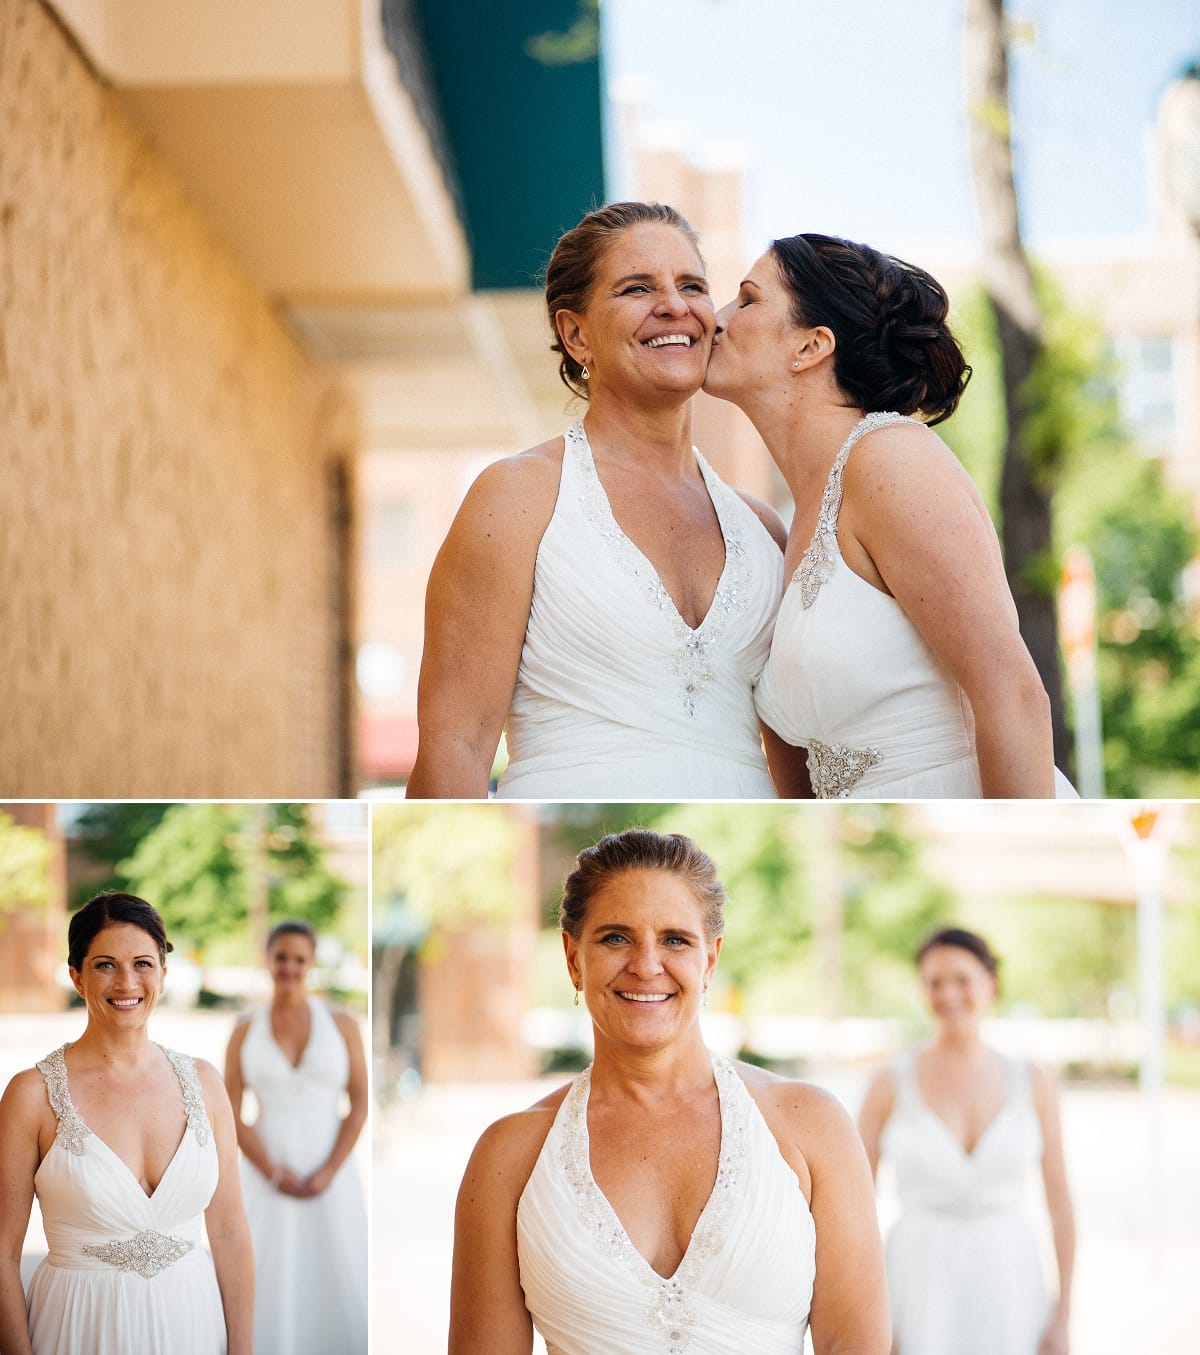 Beth and Gina Shakopee Wedding Photography 19